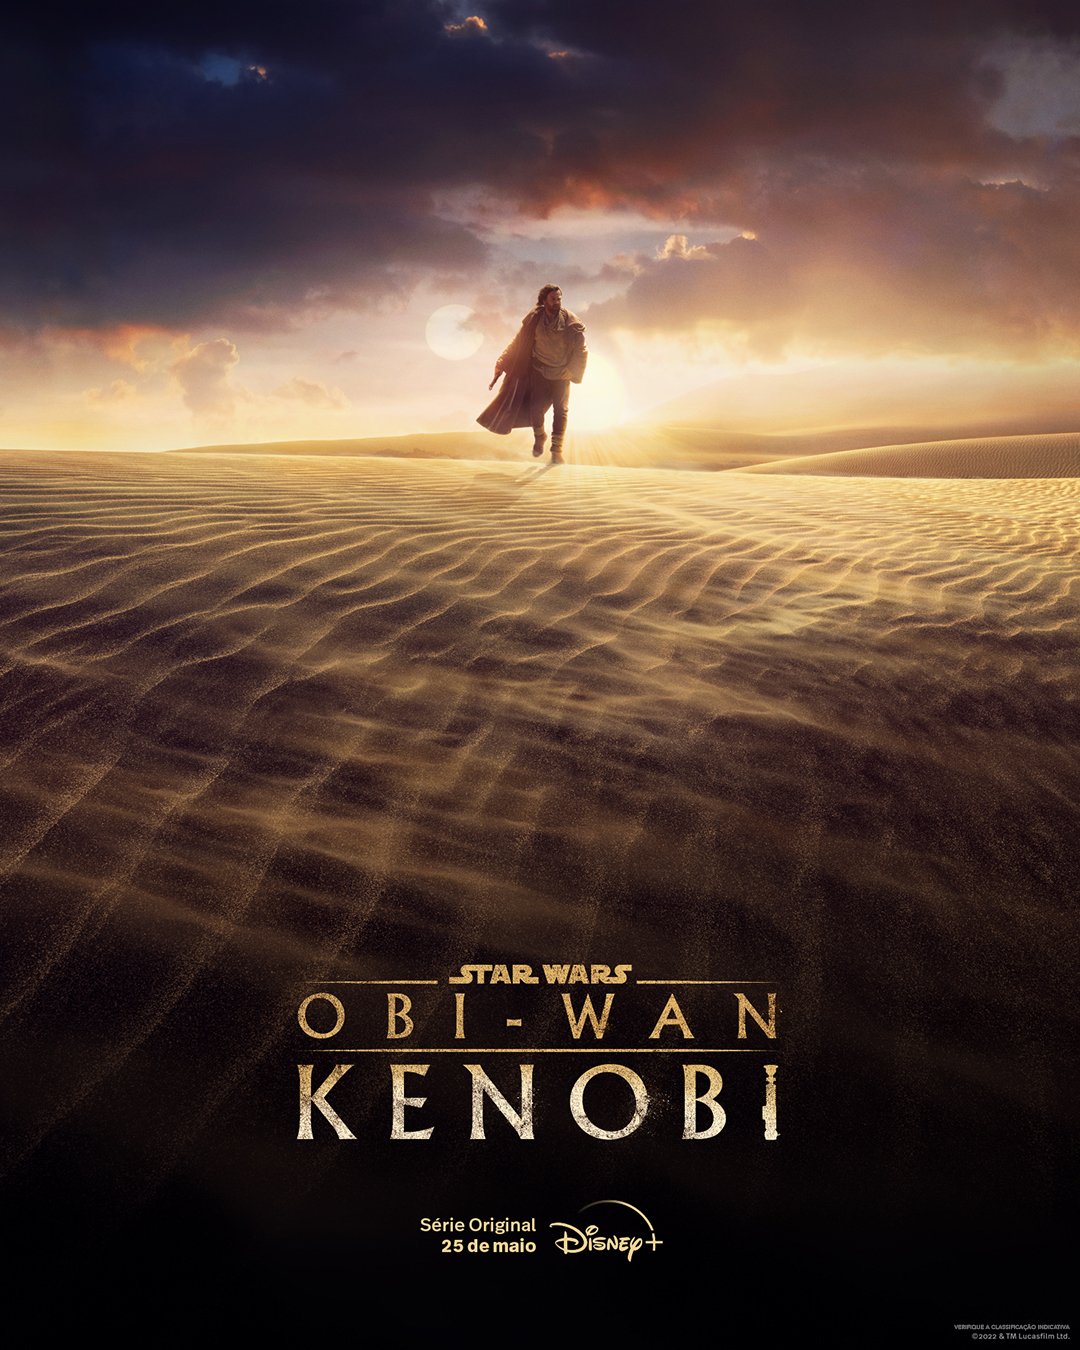 Obi-Wan-Kenobi-Poster Pôster de Obi-Wan Kenobi trouxe easter egg de Darth Vader que nem todos perceberam